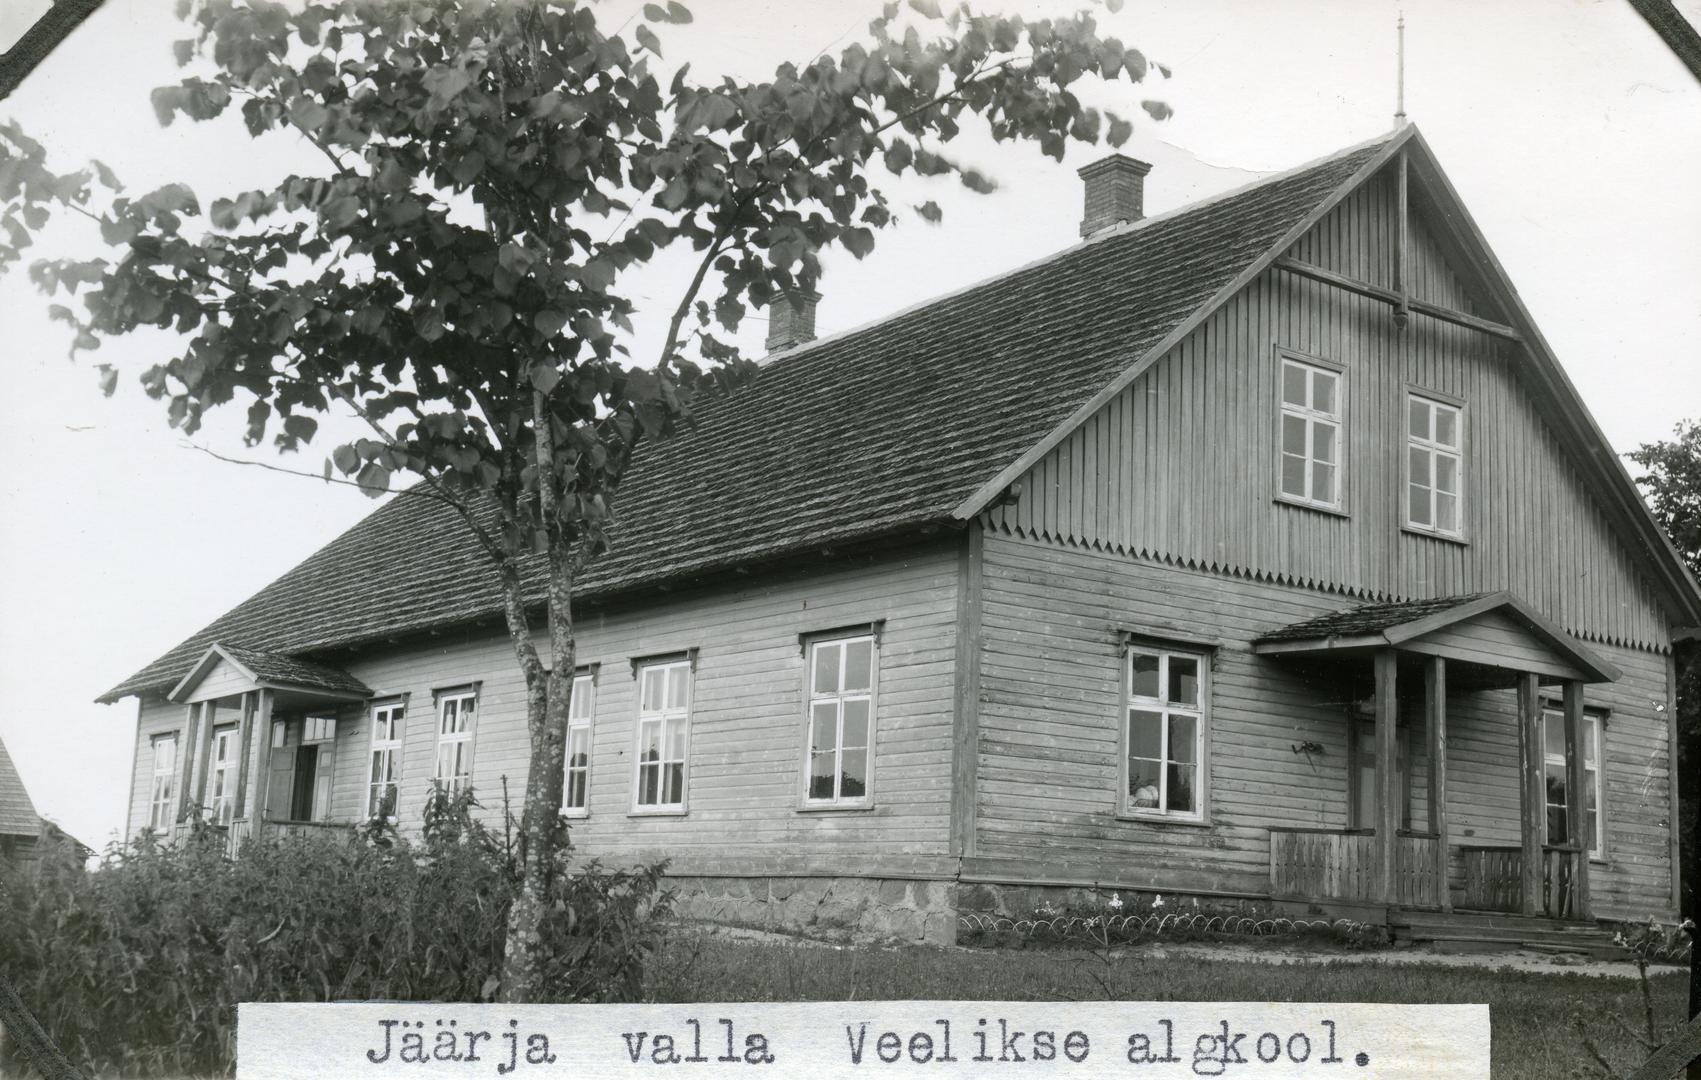 Jäärja rural municipality Veelikse 6-kl Start school building